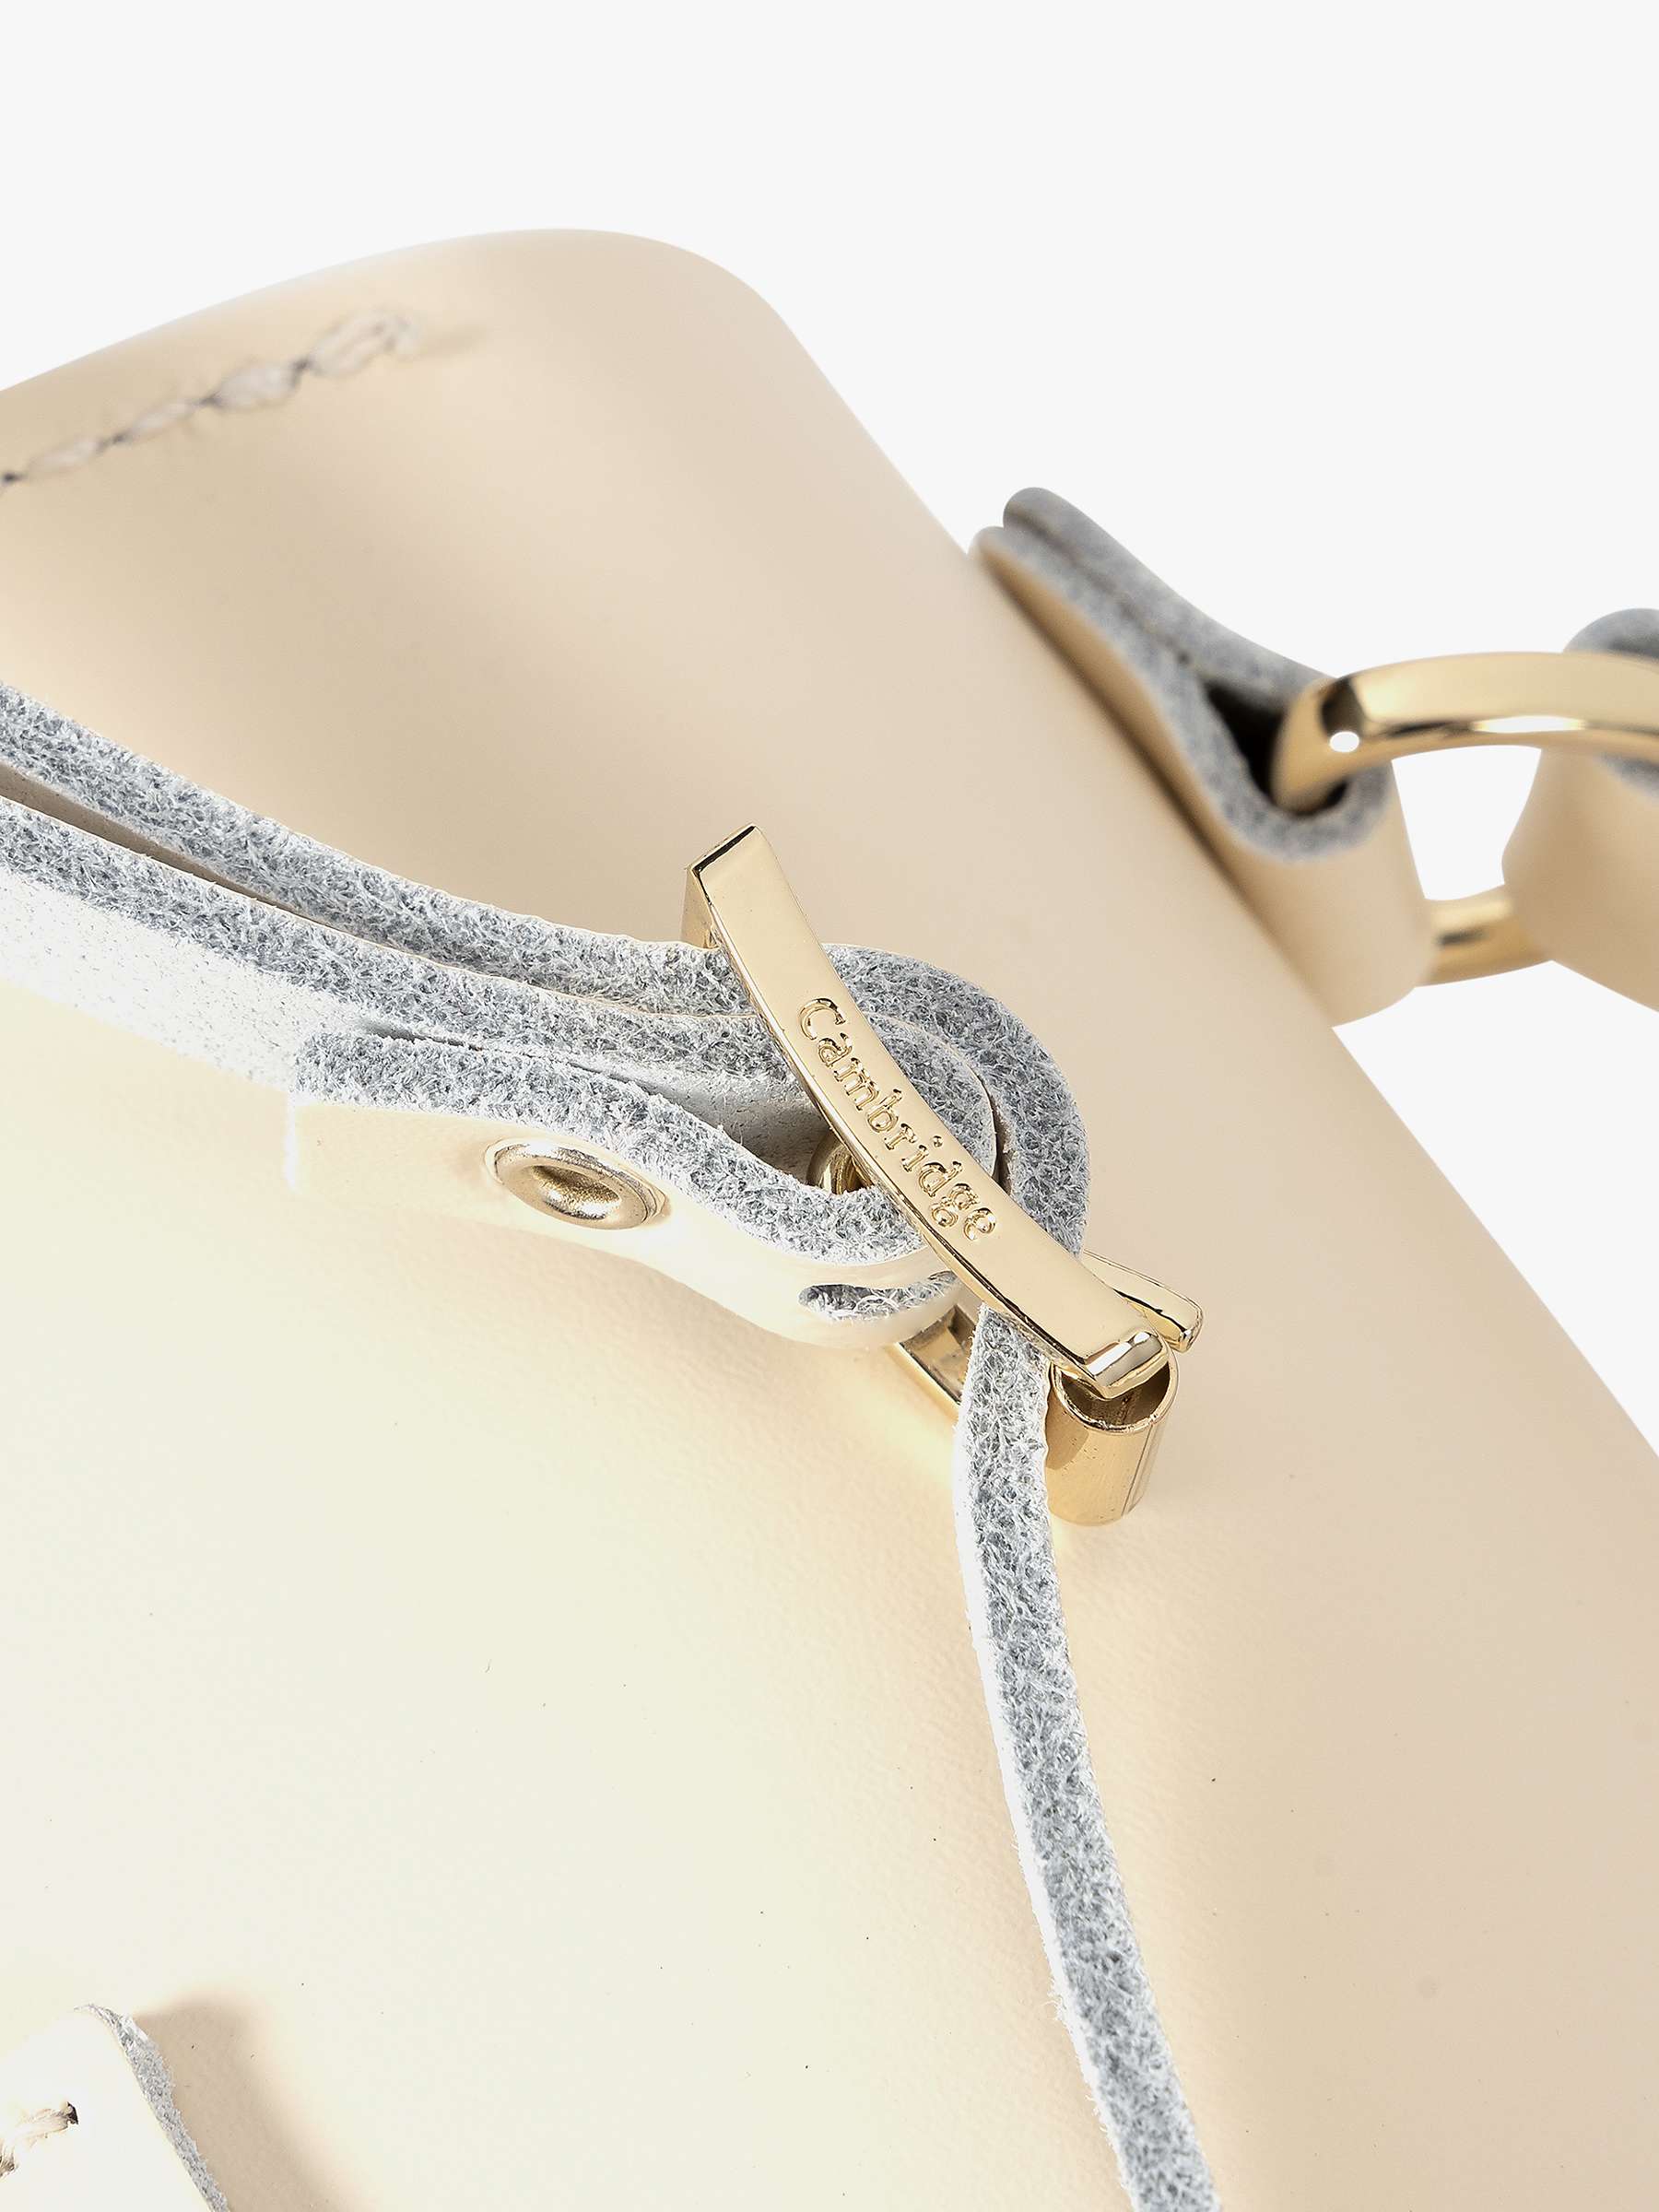 Buy Cambridge Satchel The Mini Poppy Leather Shoulder Bag Online at johnlewis.com